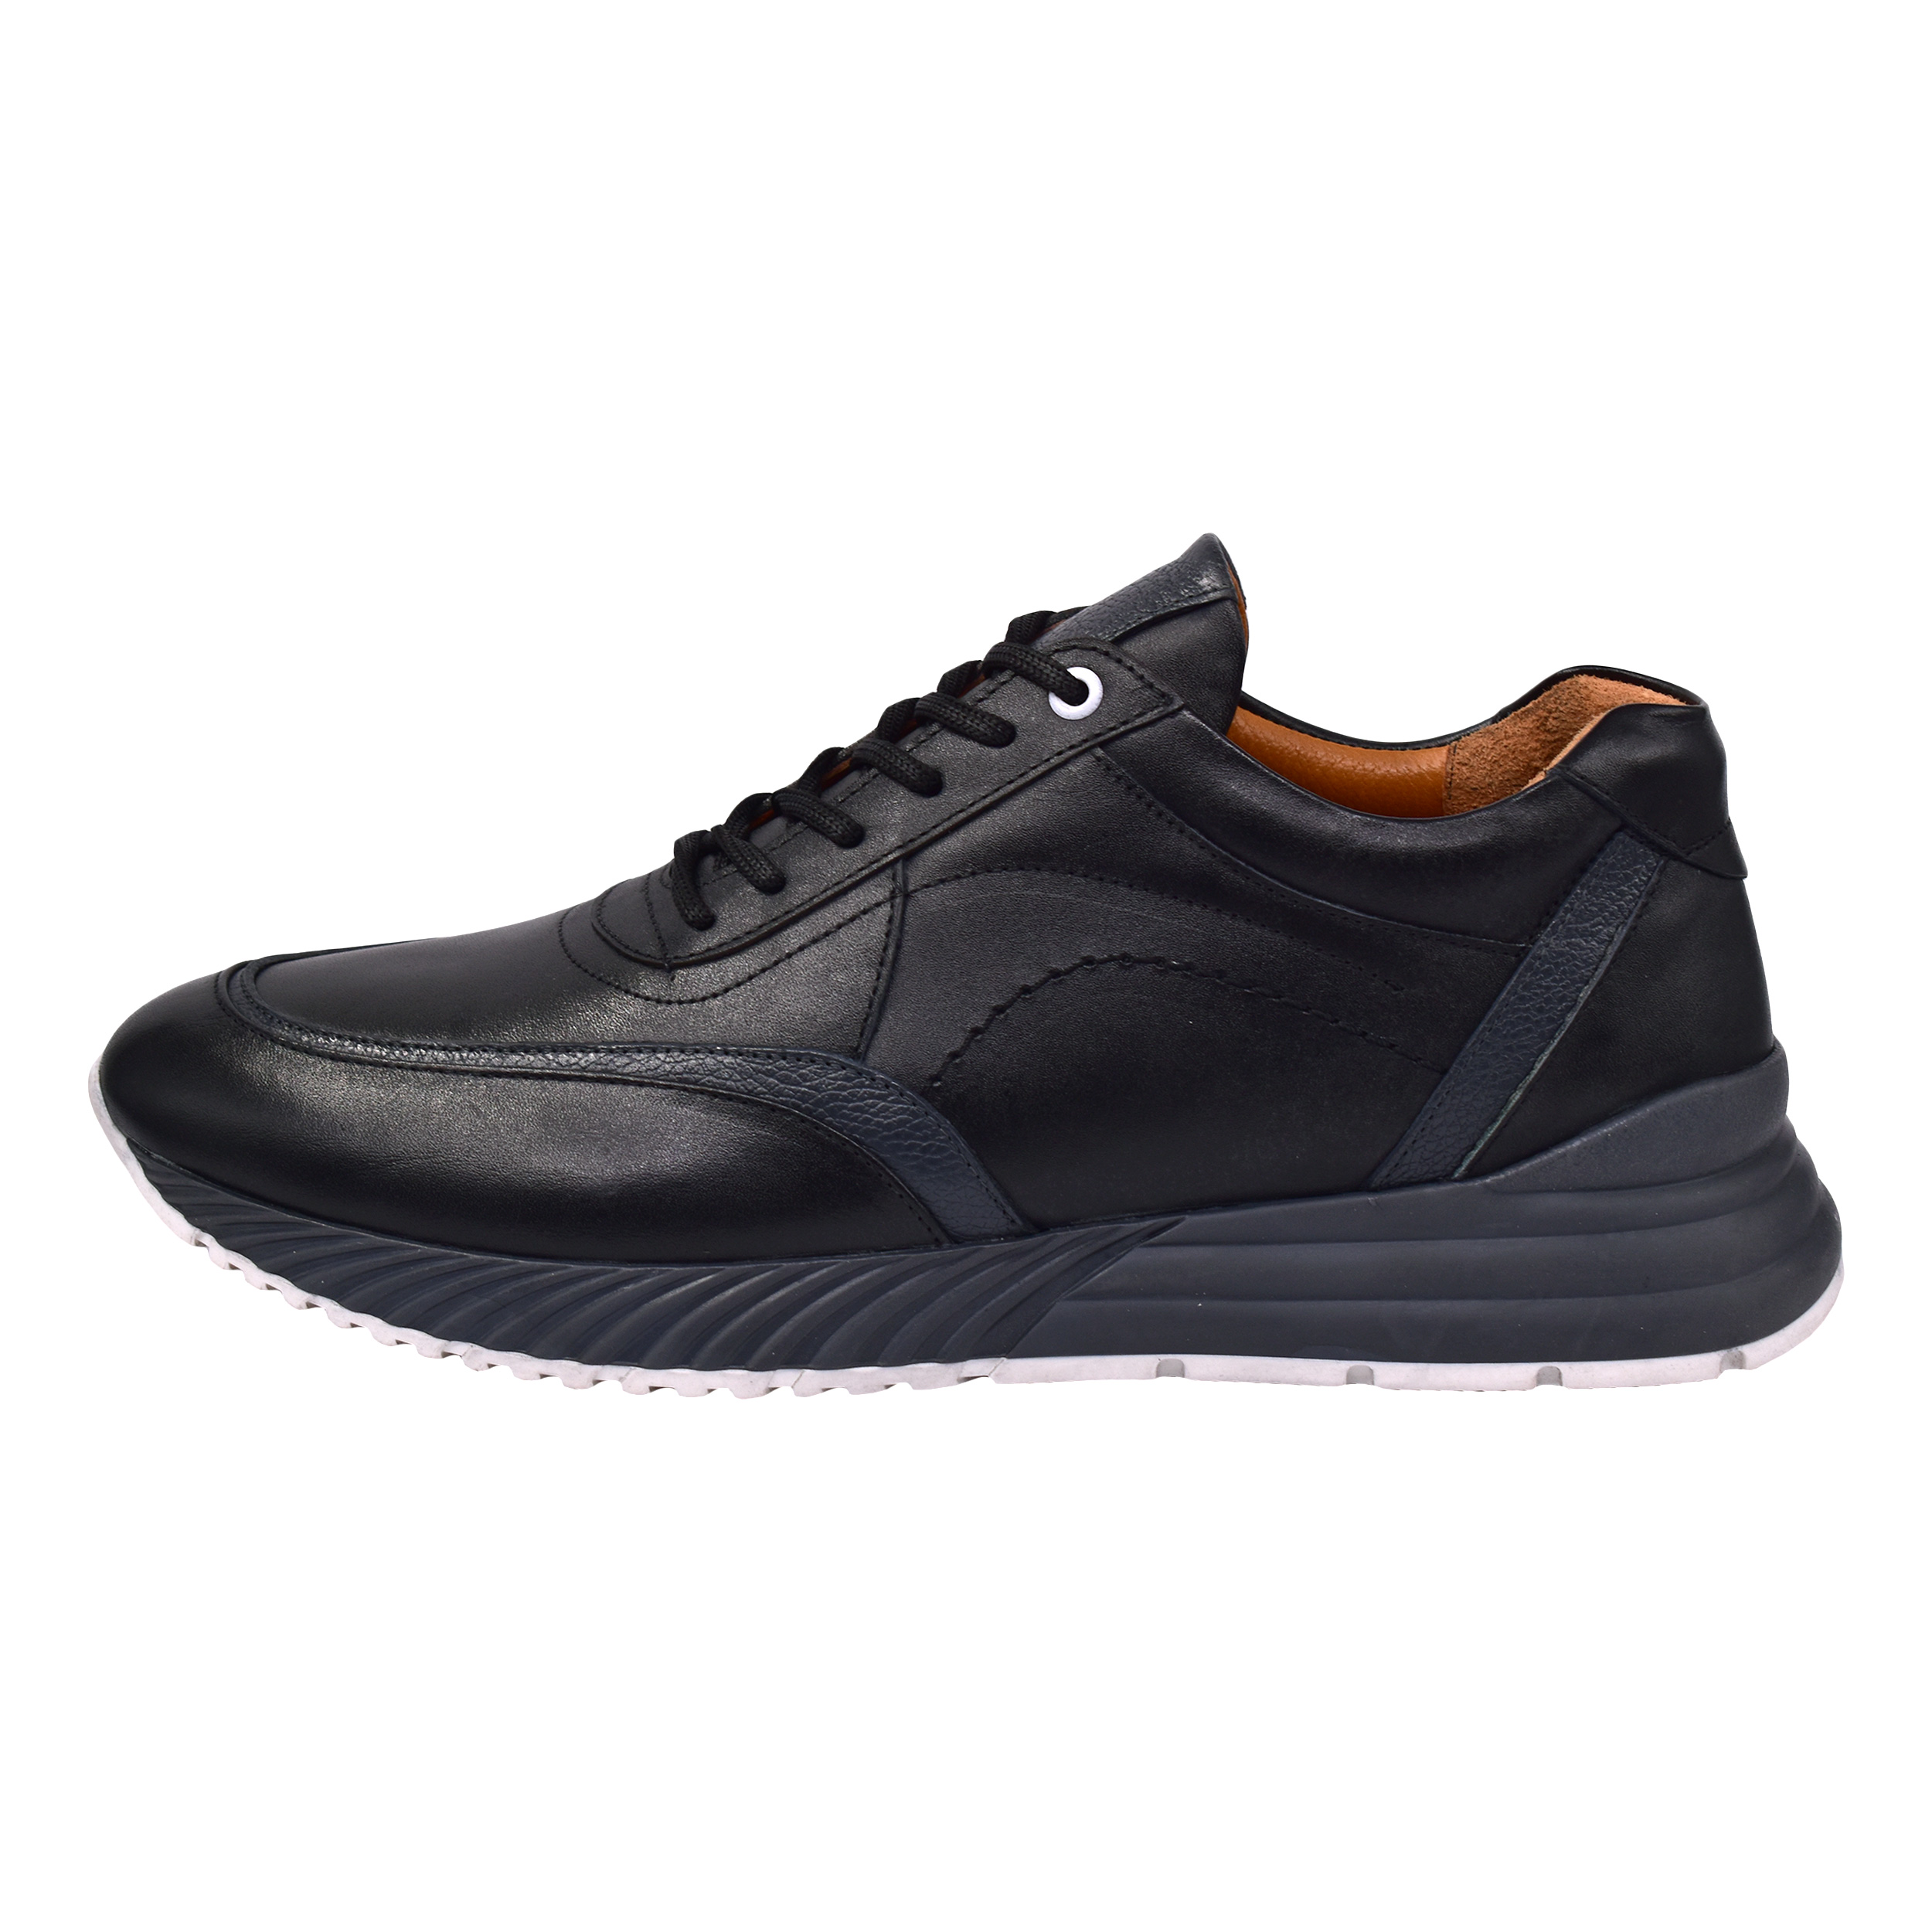 کفش روزمره مردانه پاما مدل ME-631 کد G1808 -  - 2